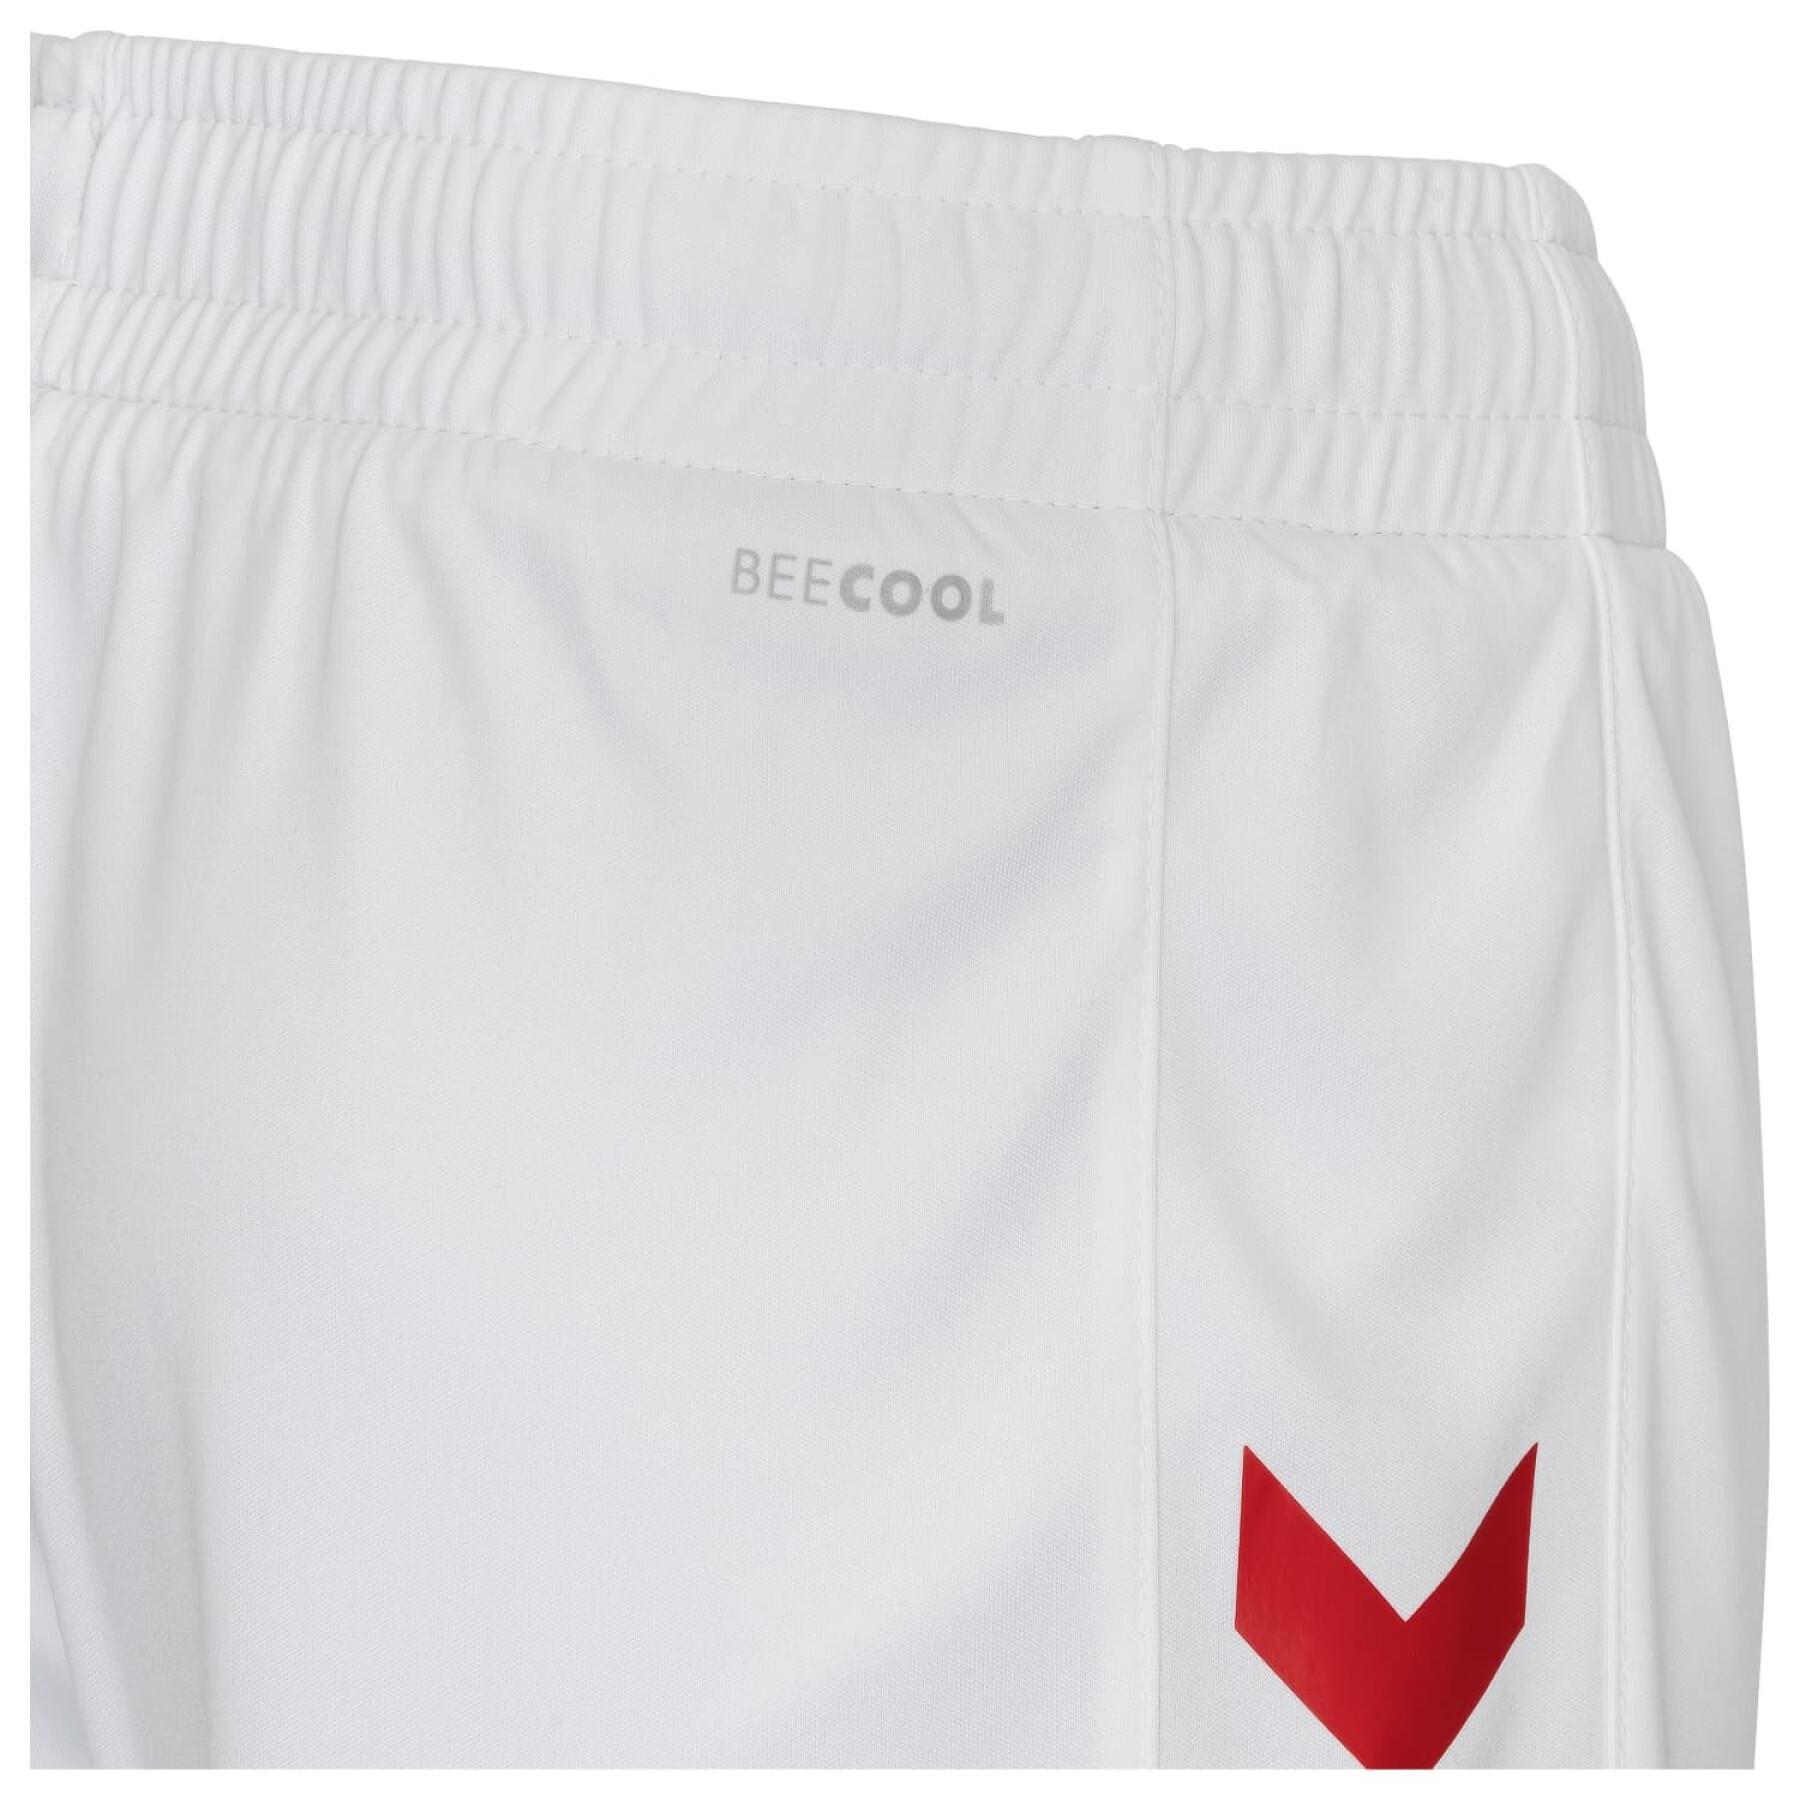 Children's polyester shorts Hummel Core Xk